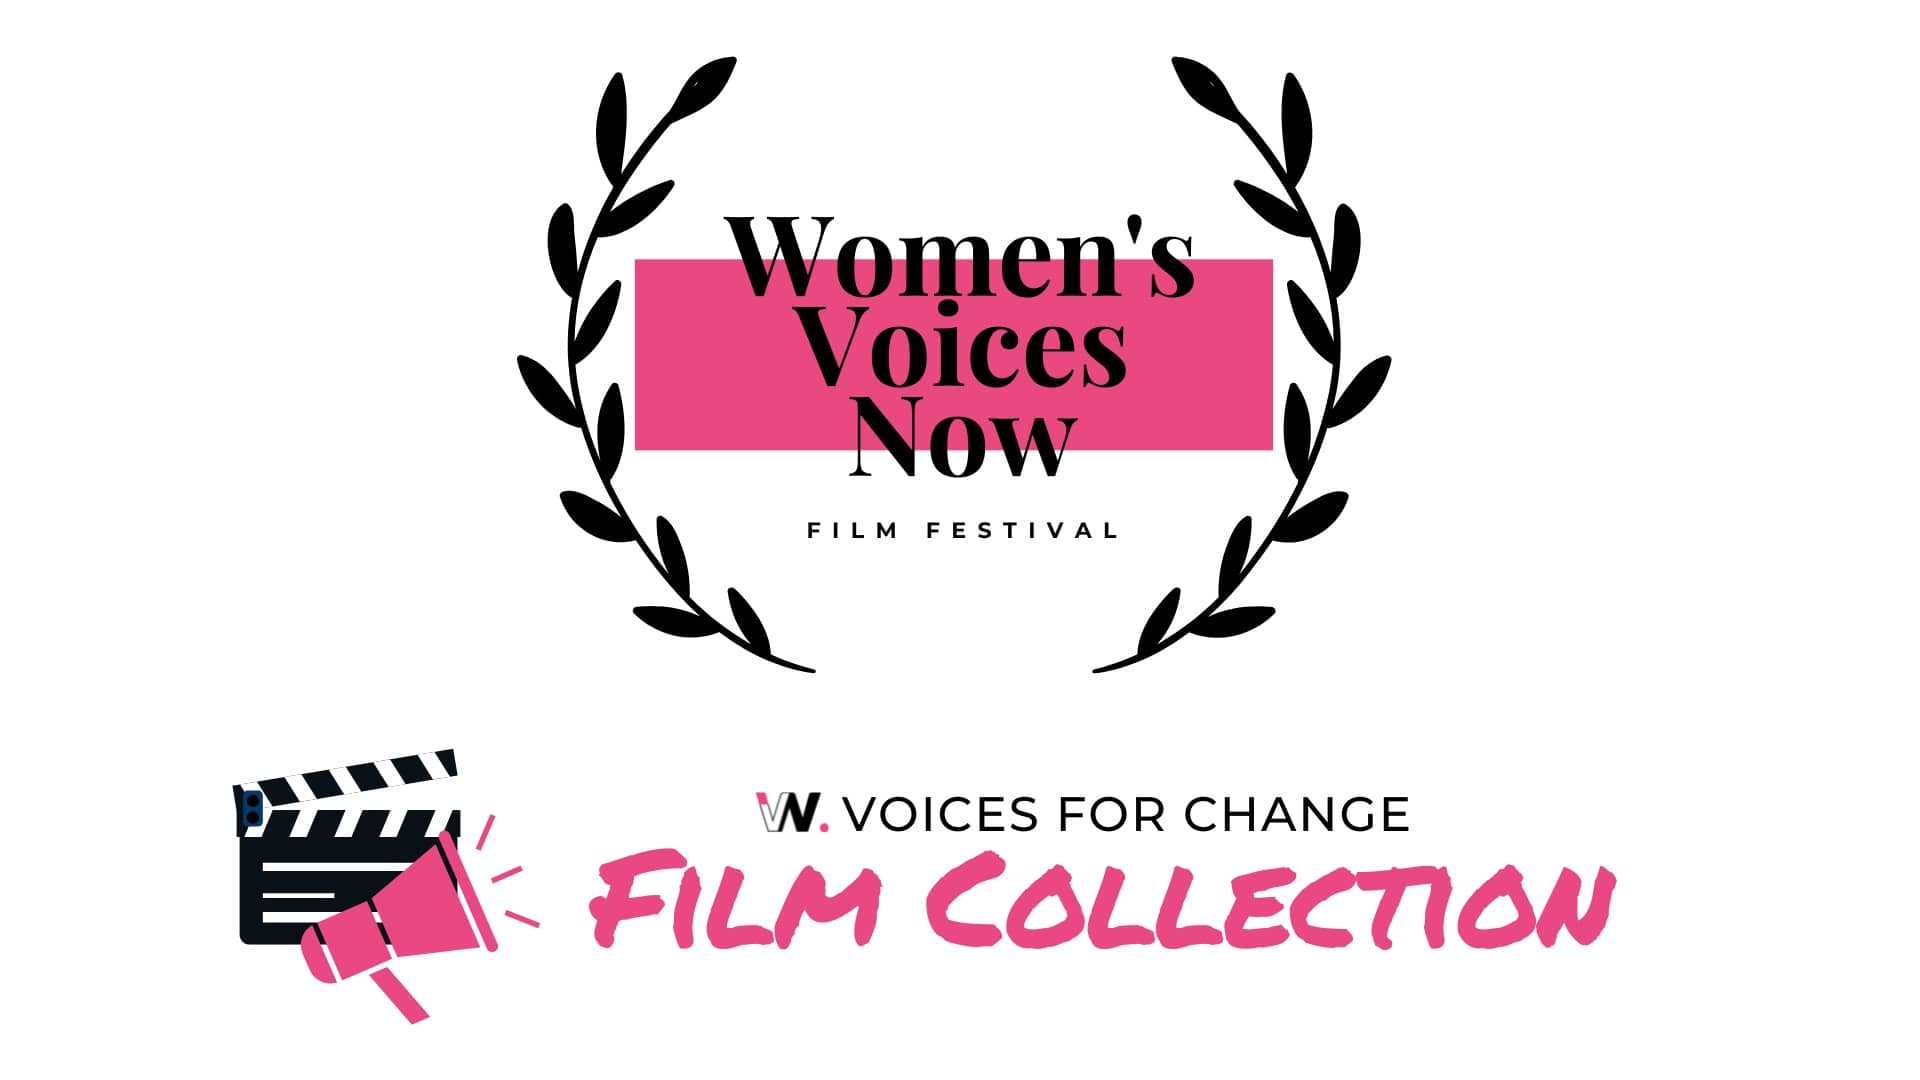 Film Festival Winners - Women's Voices Now